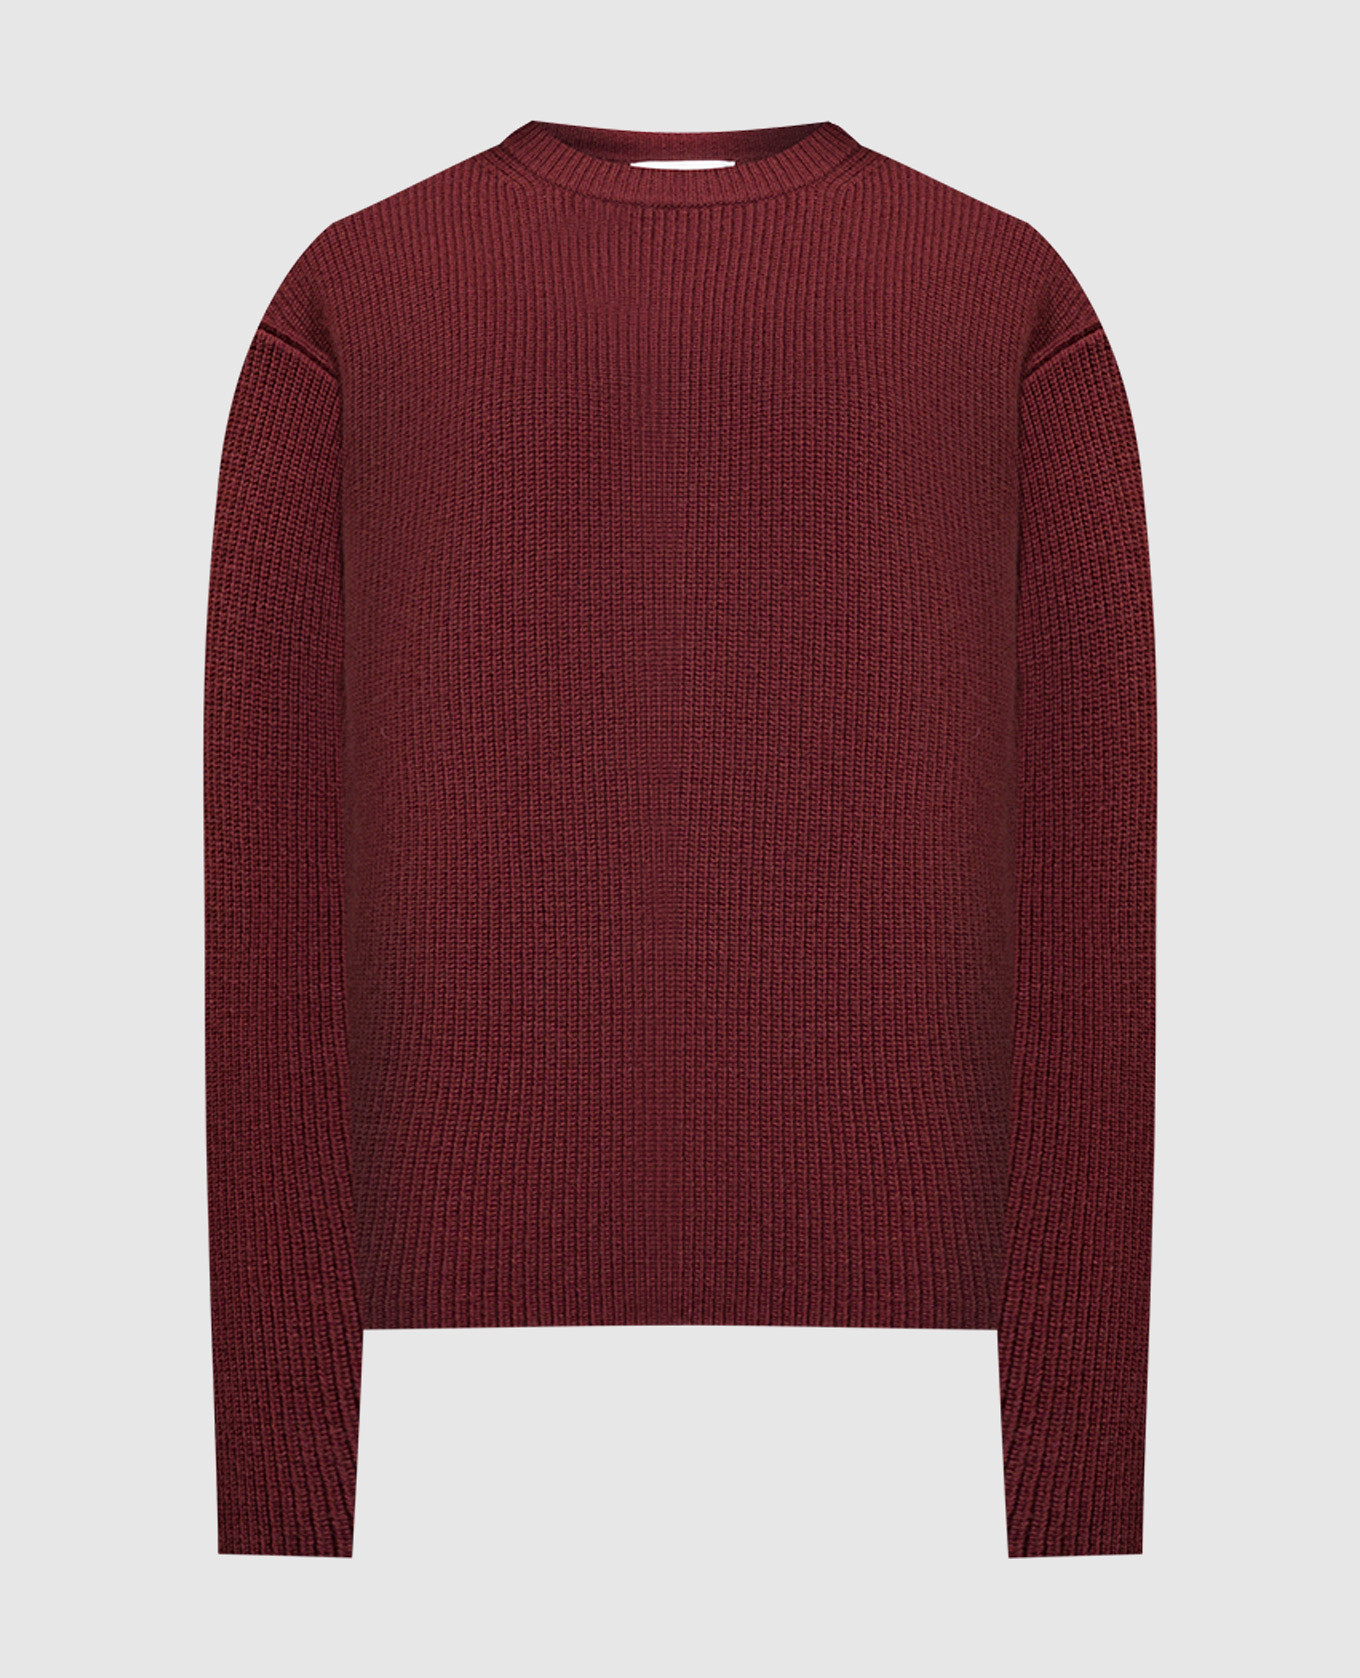 Burgundy wool sweater of a free cut